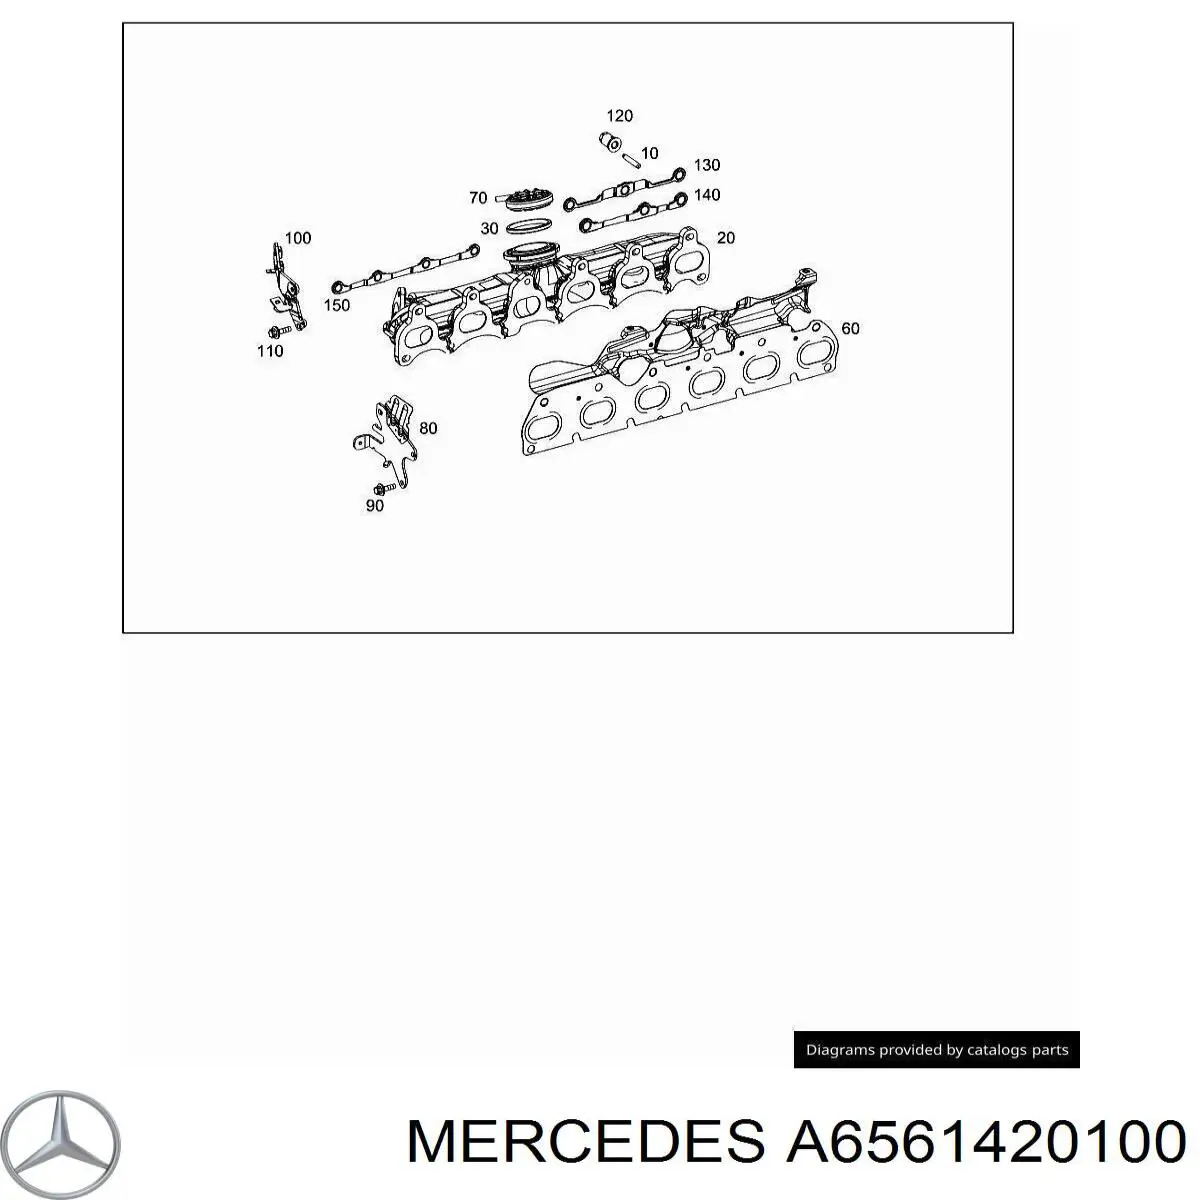 Vedante de tubo coletor de escape para Mercedes ML/GLE (W167)